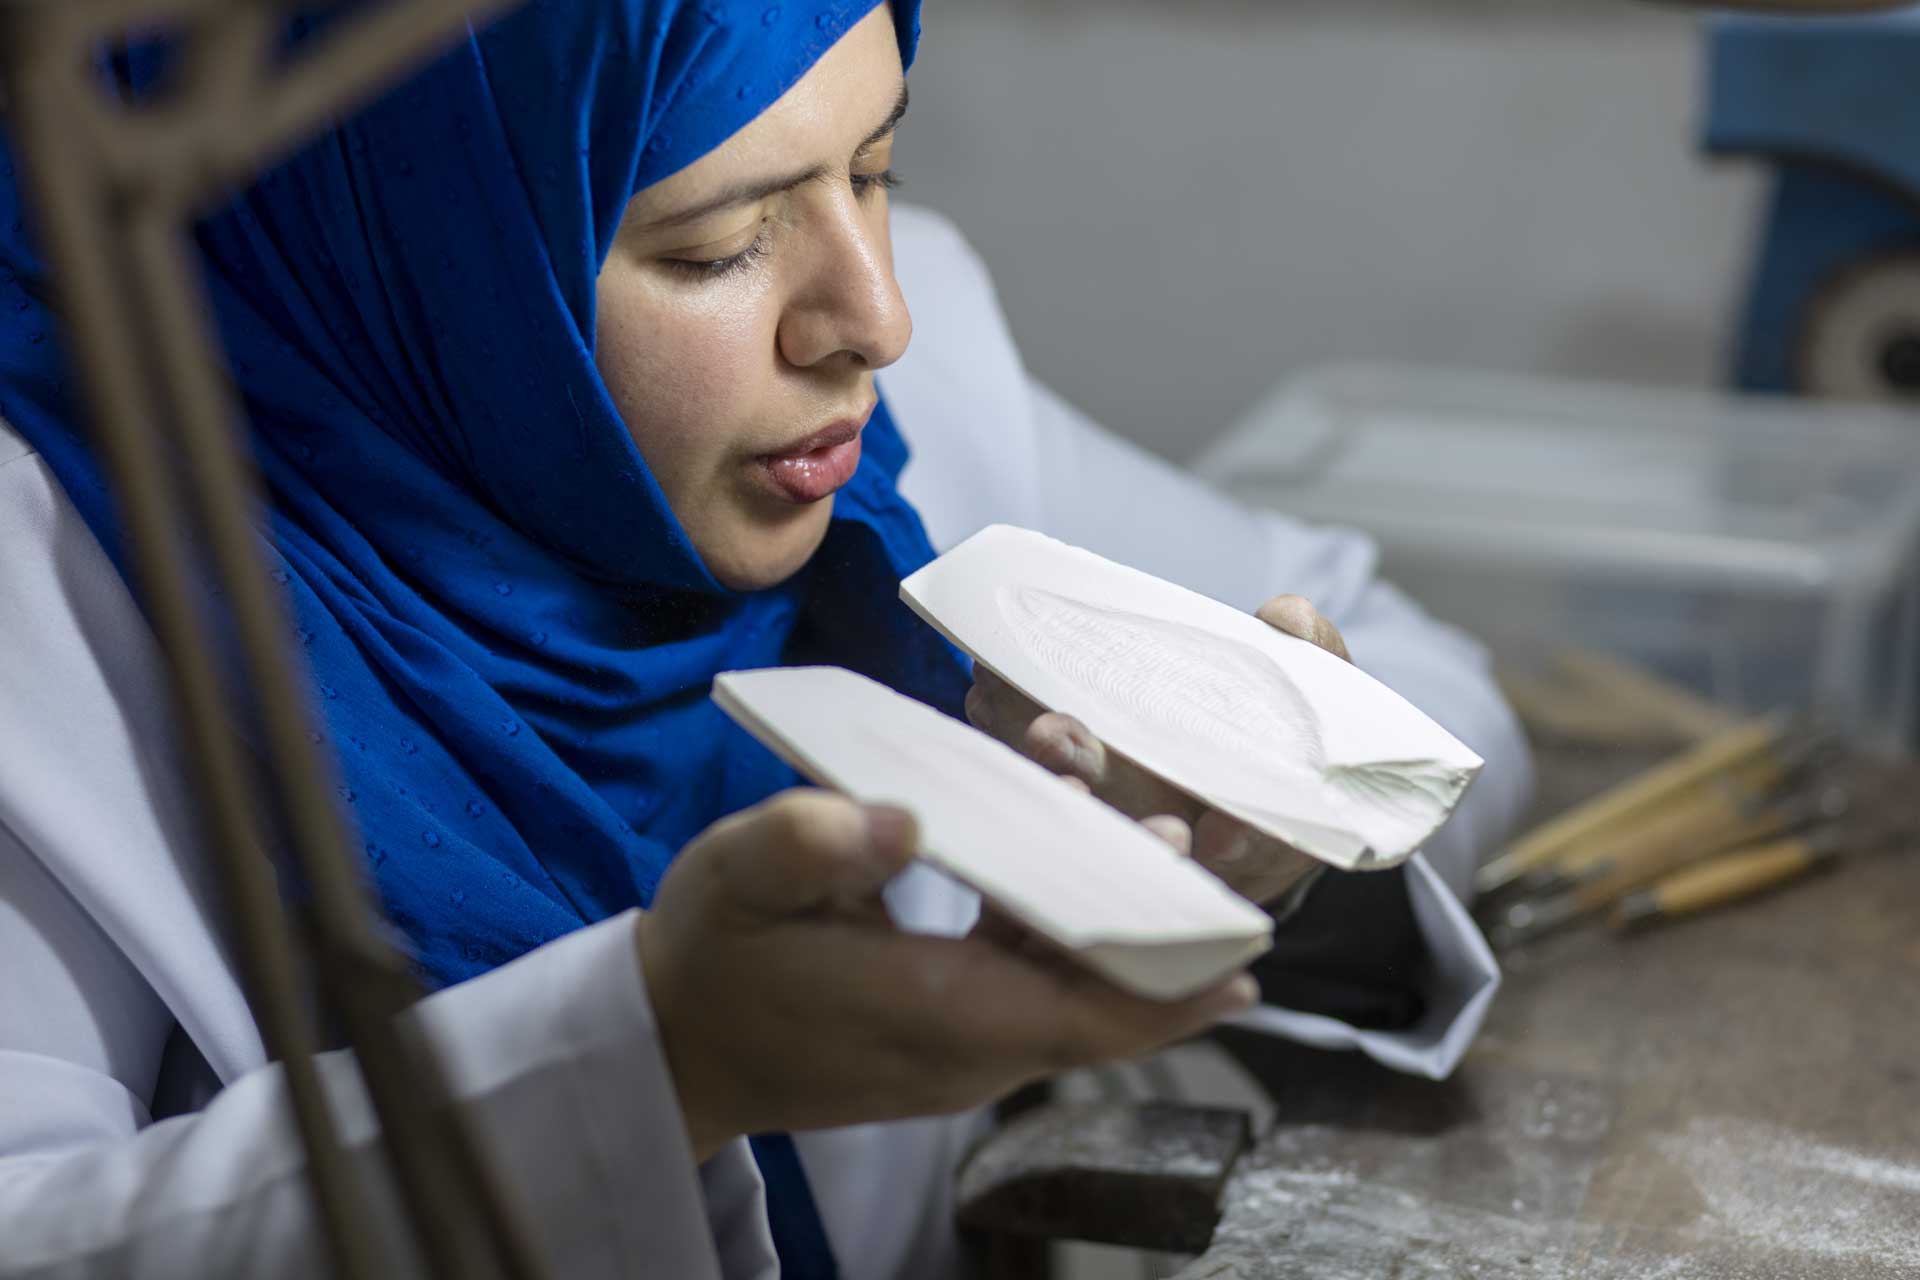 Azza Al Qubaisi, an Emirati jeweller, at work